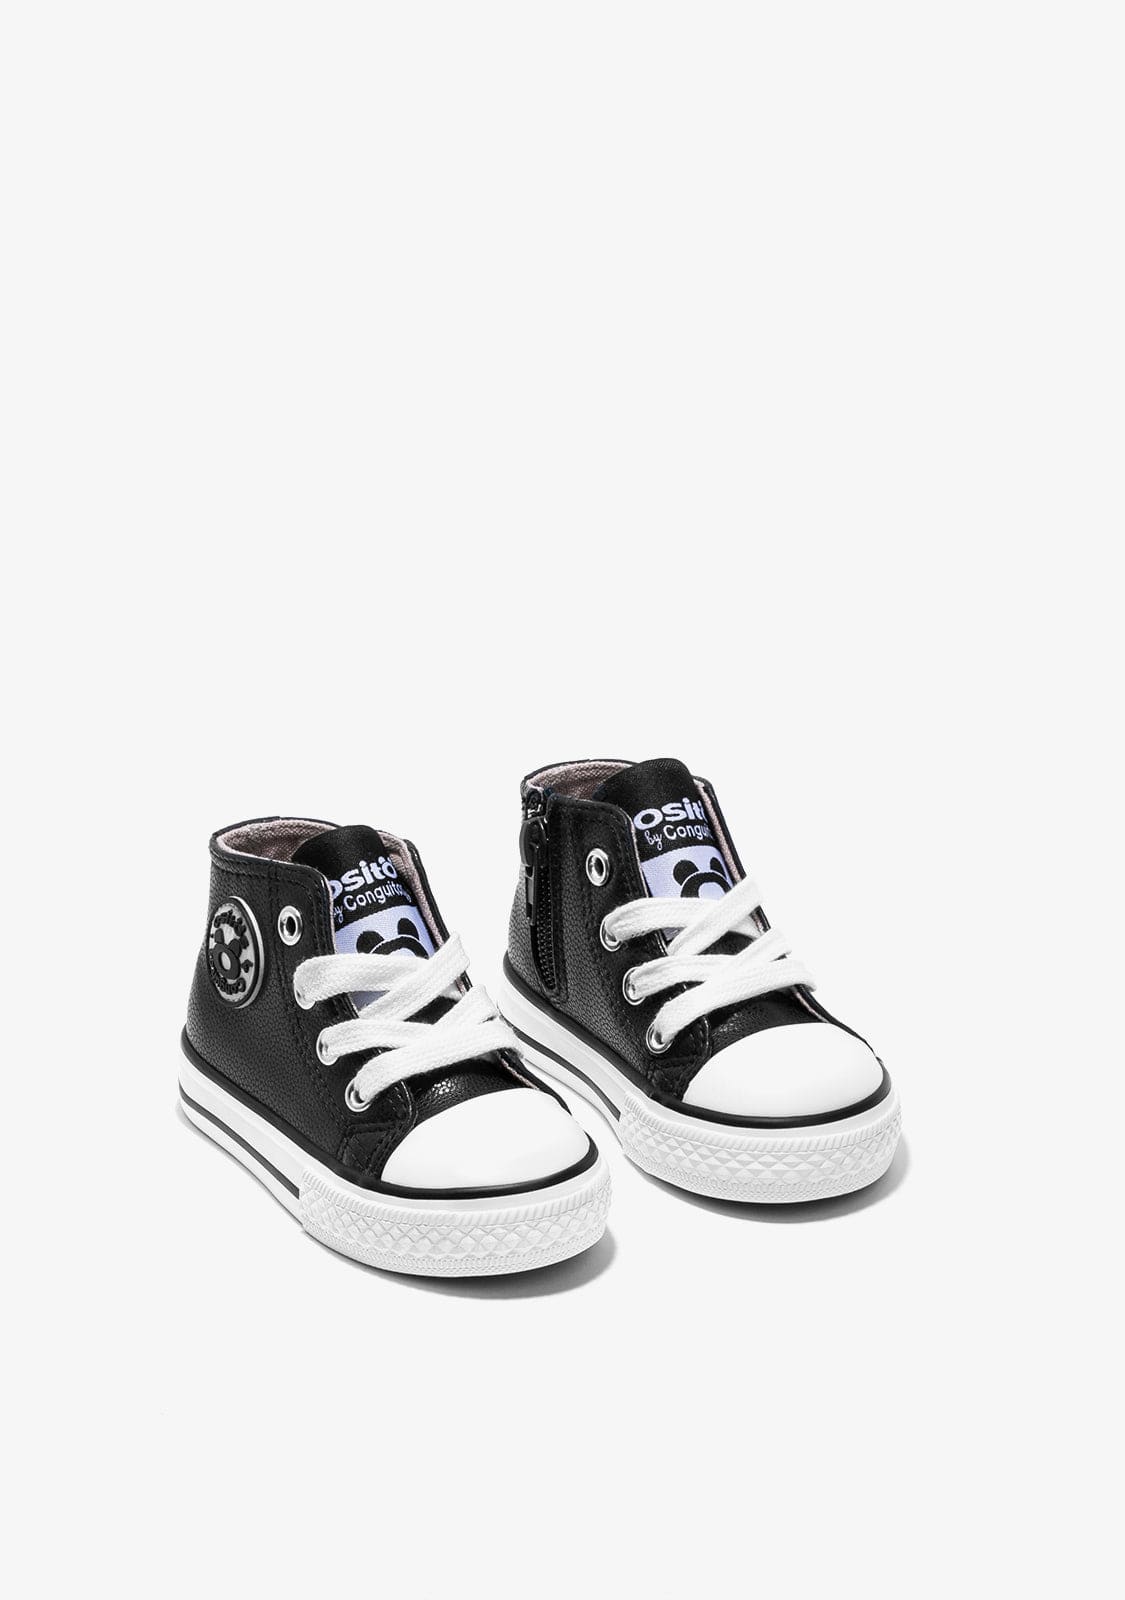 OSITO Shoes Baby's Black Logo Hi-Top Sneakers Napa